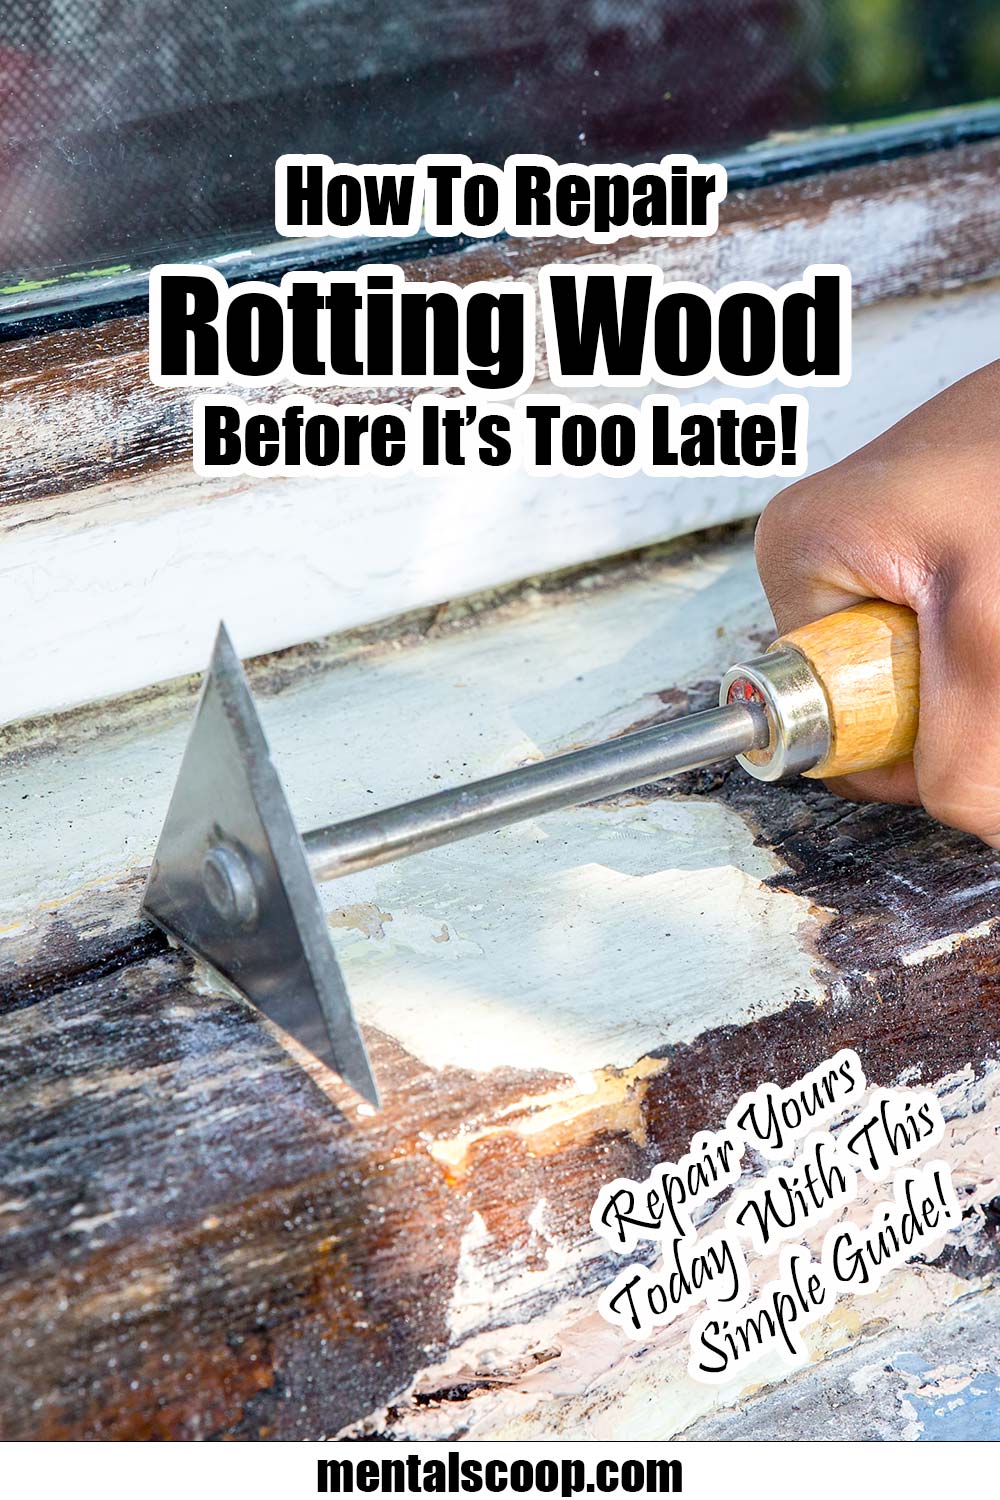 Restore Rotten Wood  Earl's Wood Hardener penetrates into soft